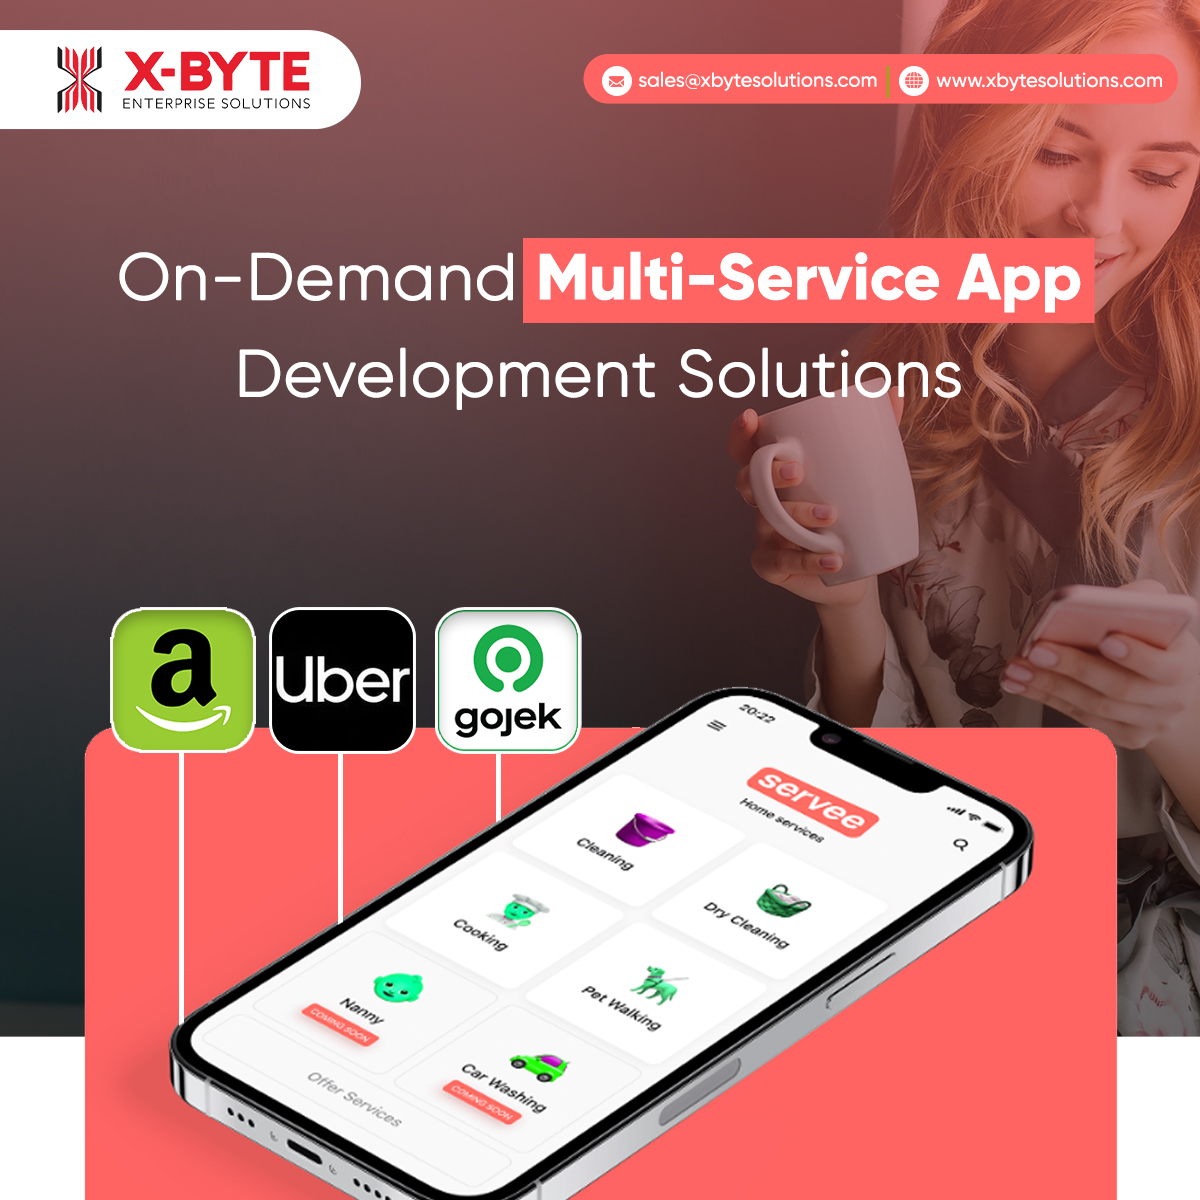 (=) sales@xbytesolutions.com () www.xbytesolutions.com

 

On-Demand|Multi-Service App
Development Solutions